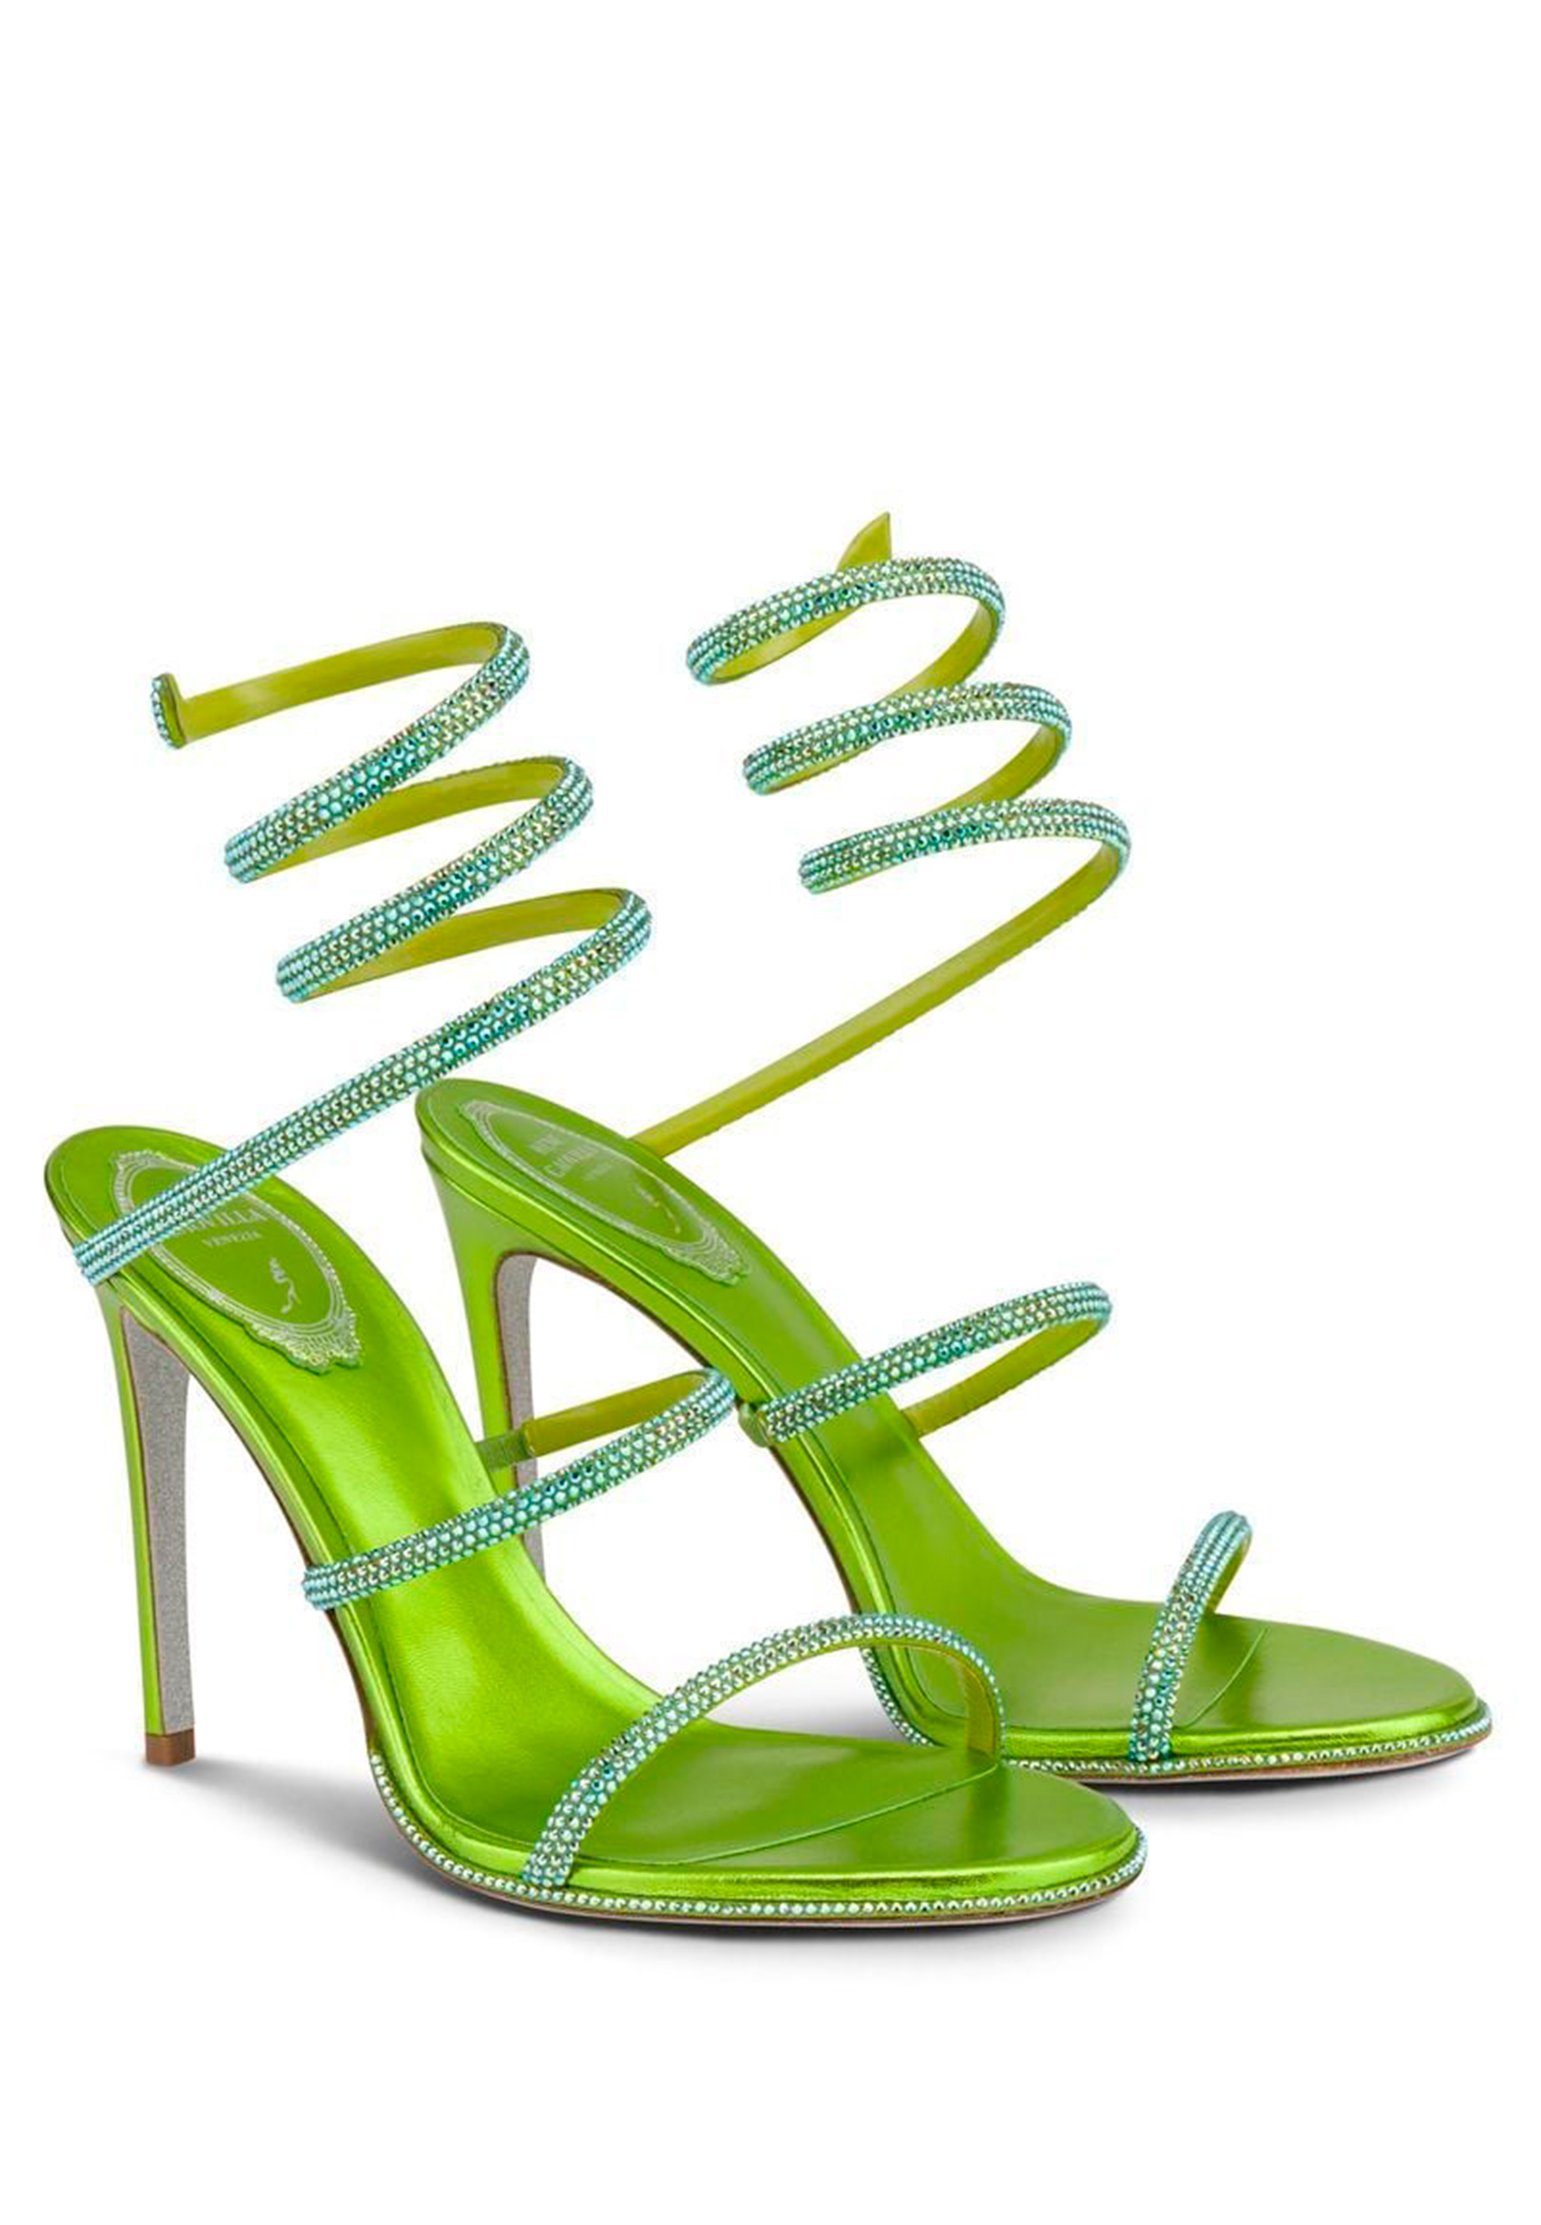 Shoes RENE CAOVILLA Color: green (Code: 2374) in online store Allure